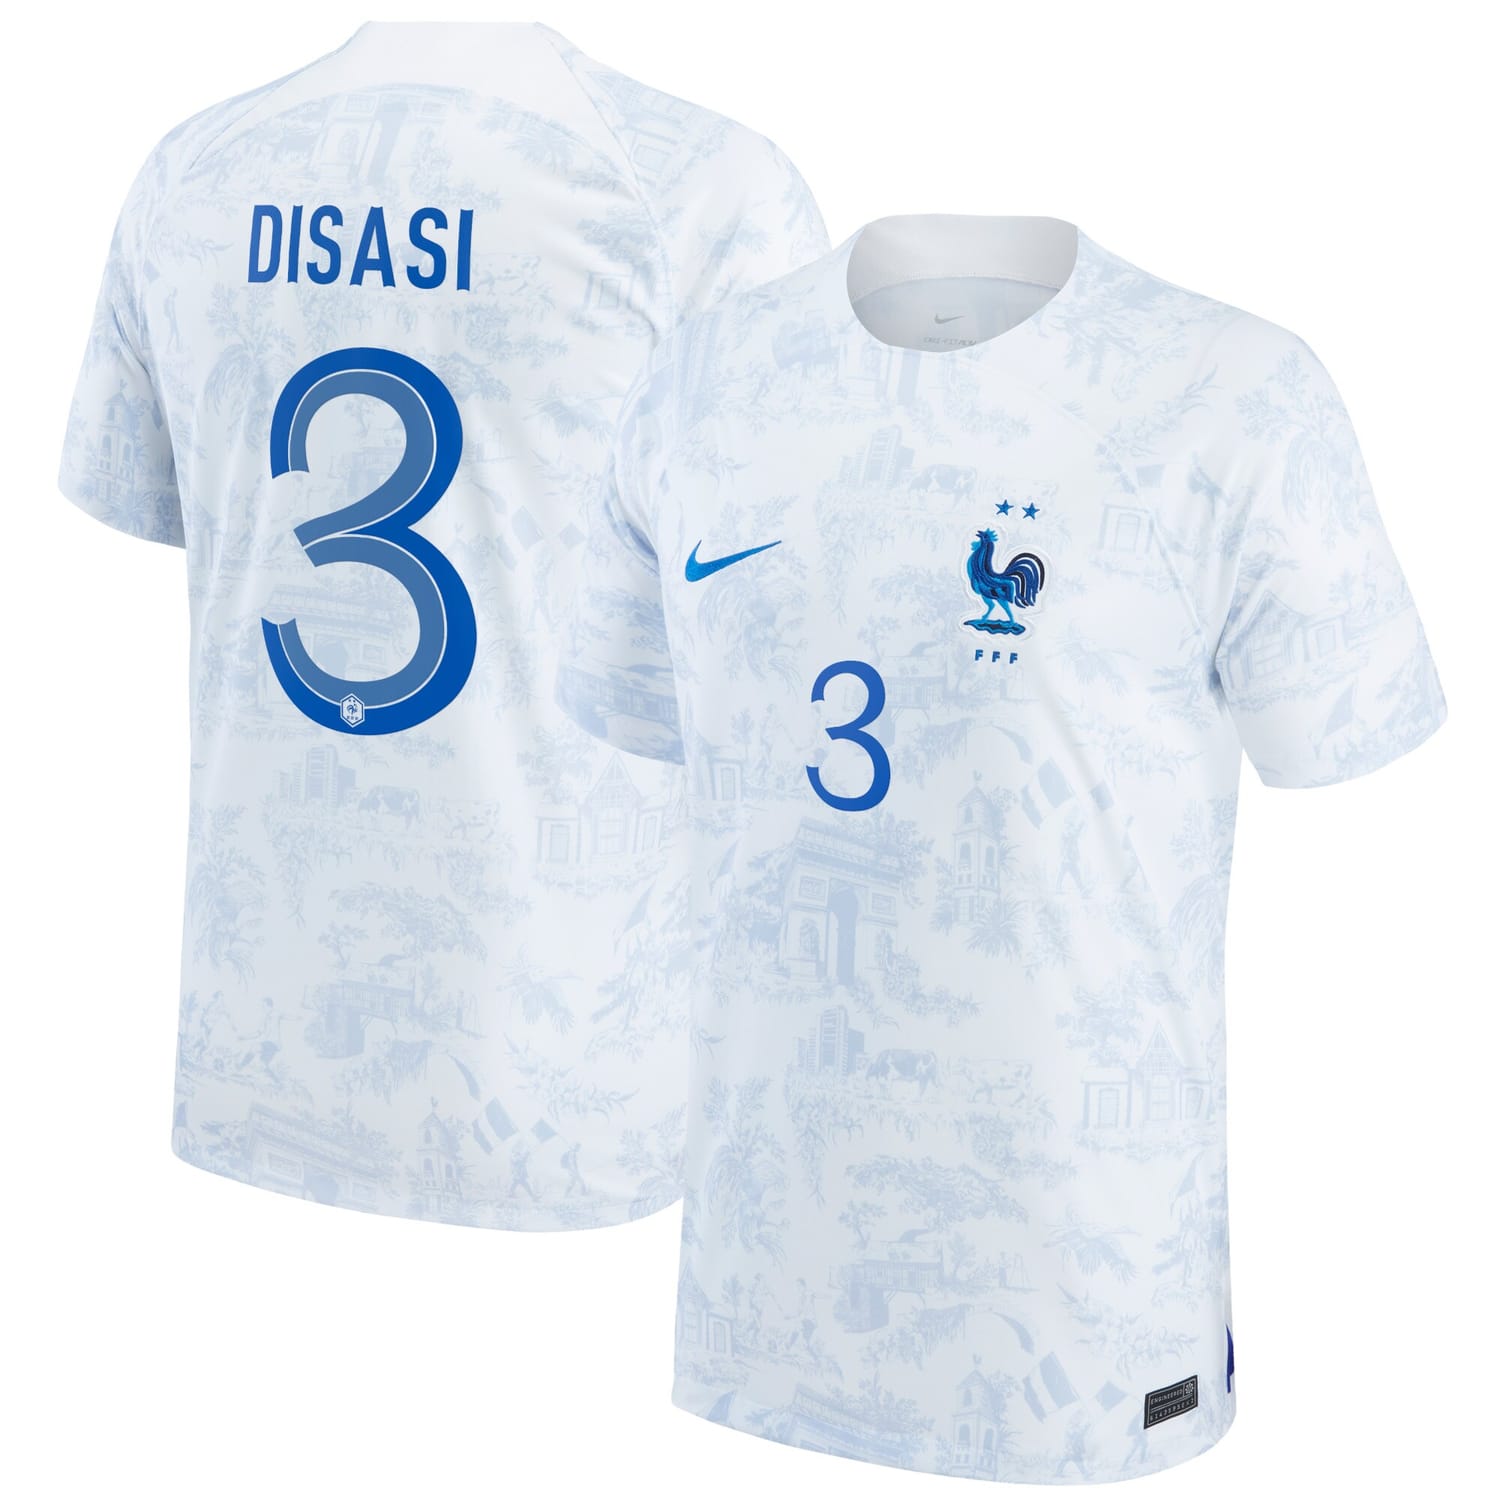 France National Team Away Jersey Shirt 2022 player Axel Disasi printing for Men